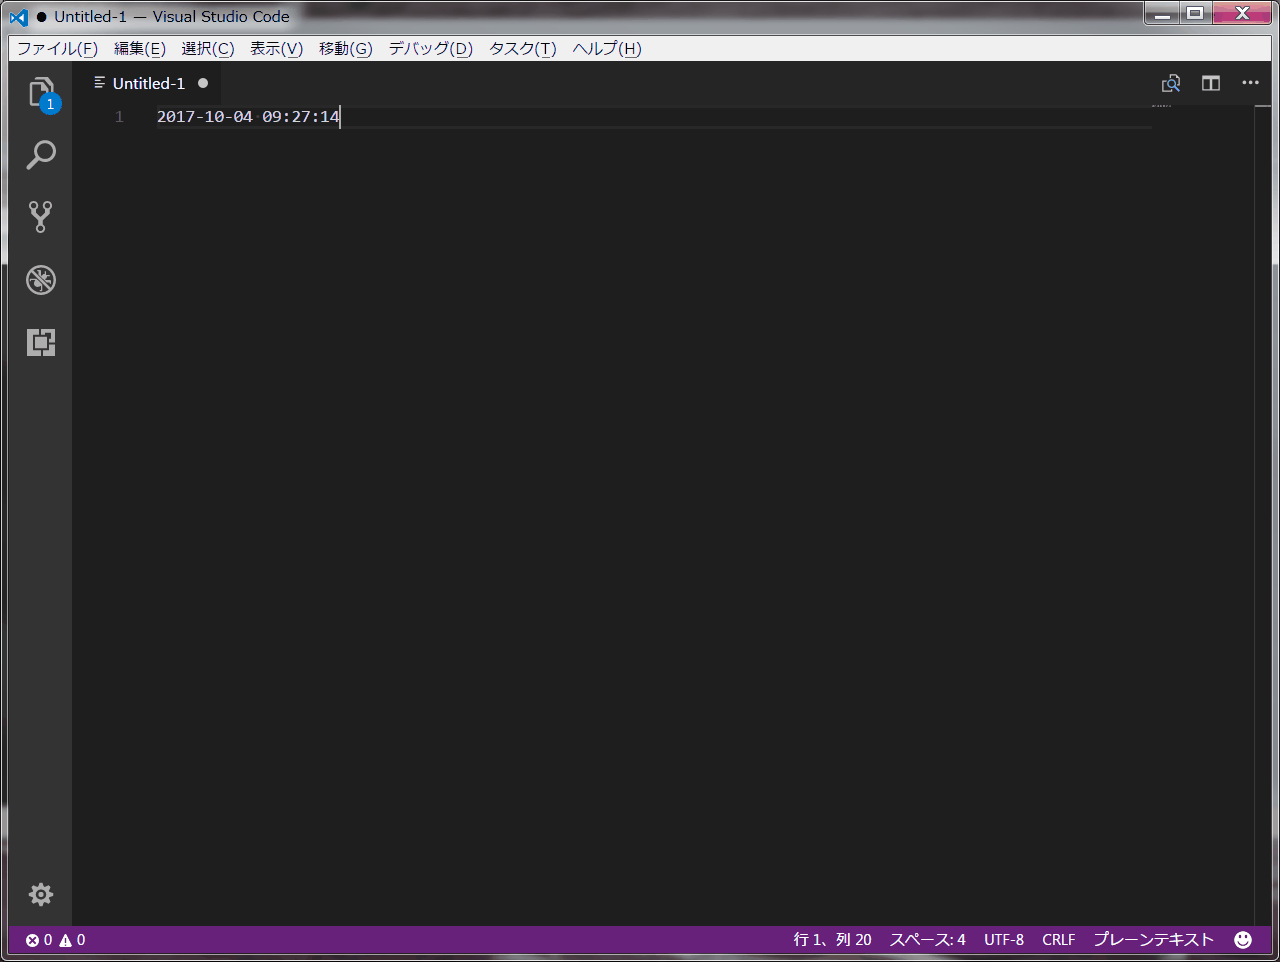 Insert Date String2 - Visual Studio Code